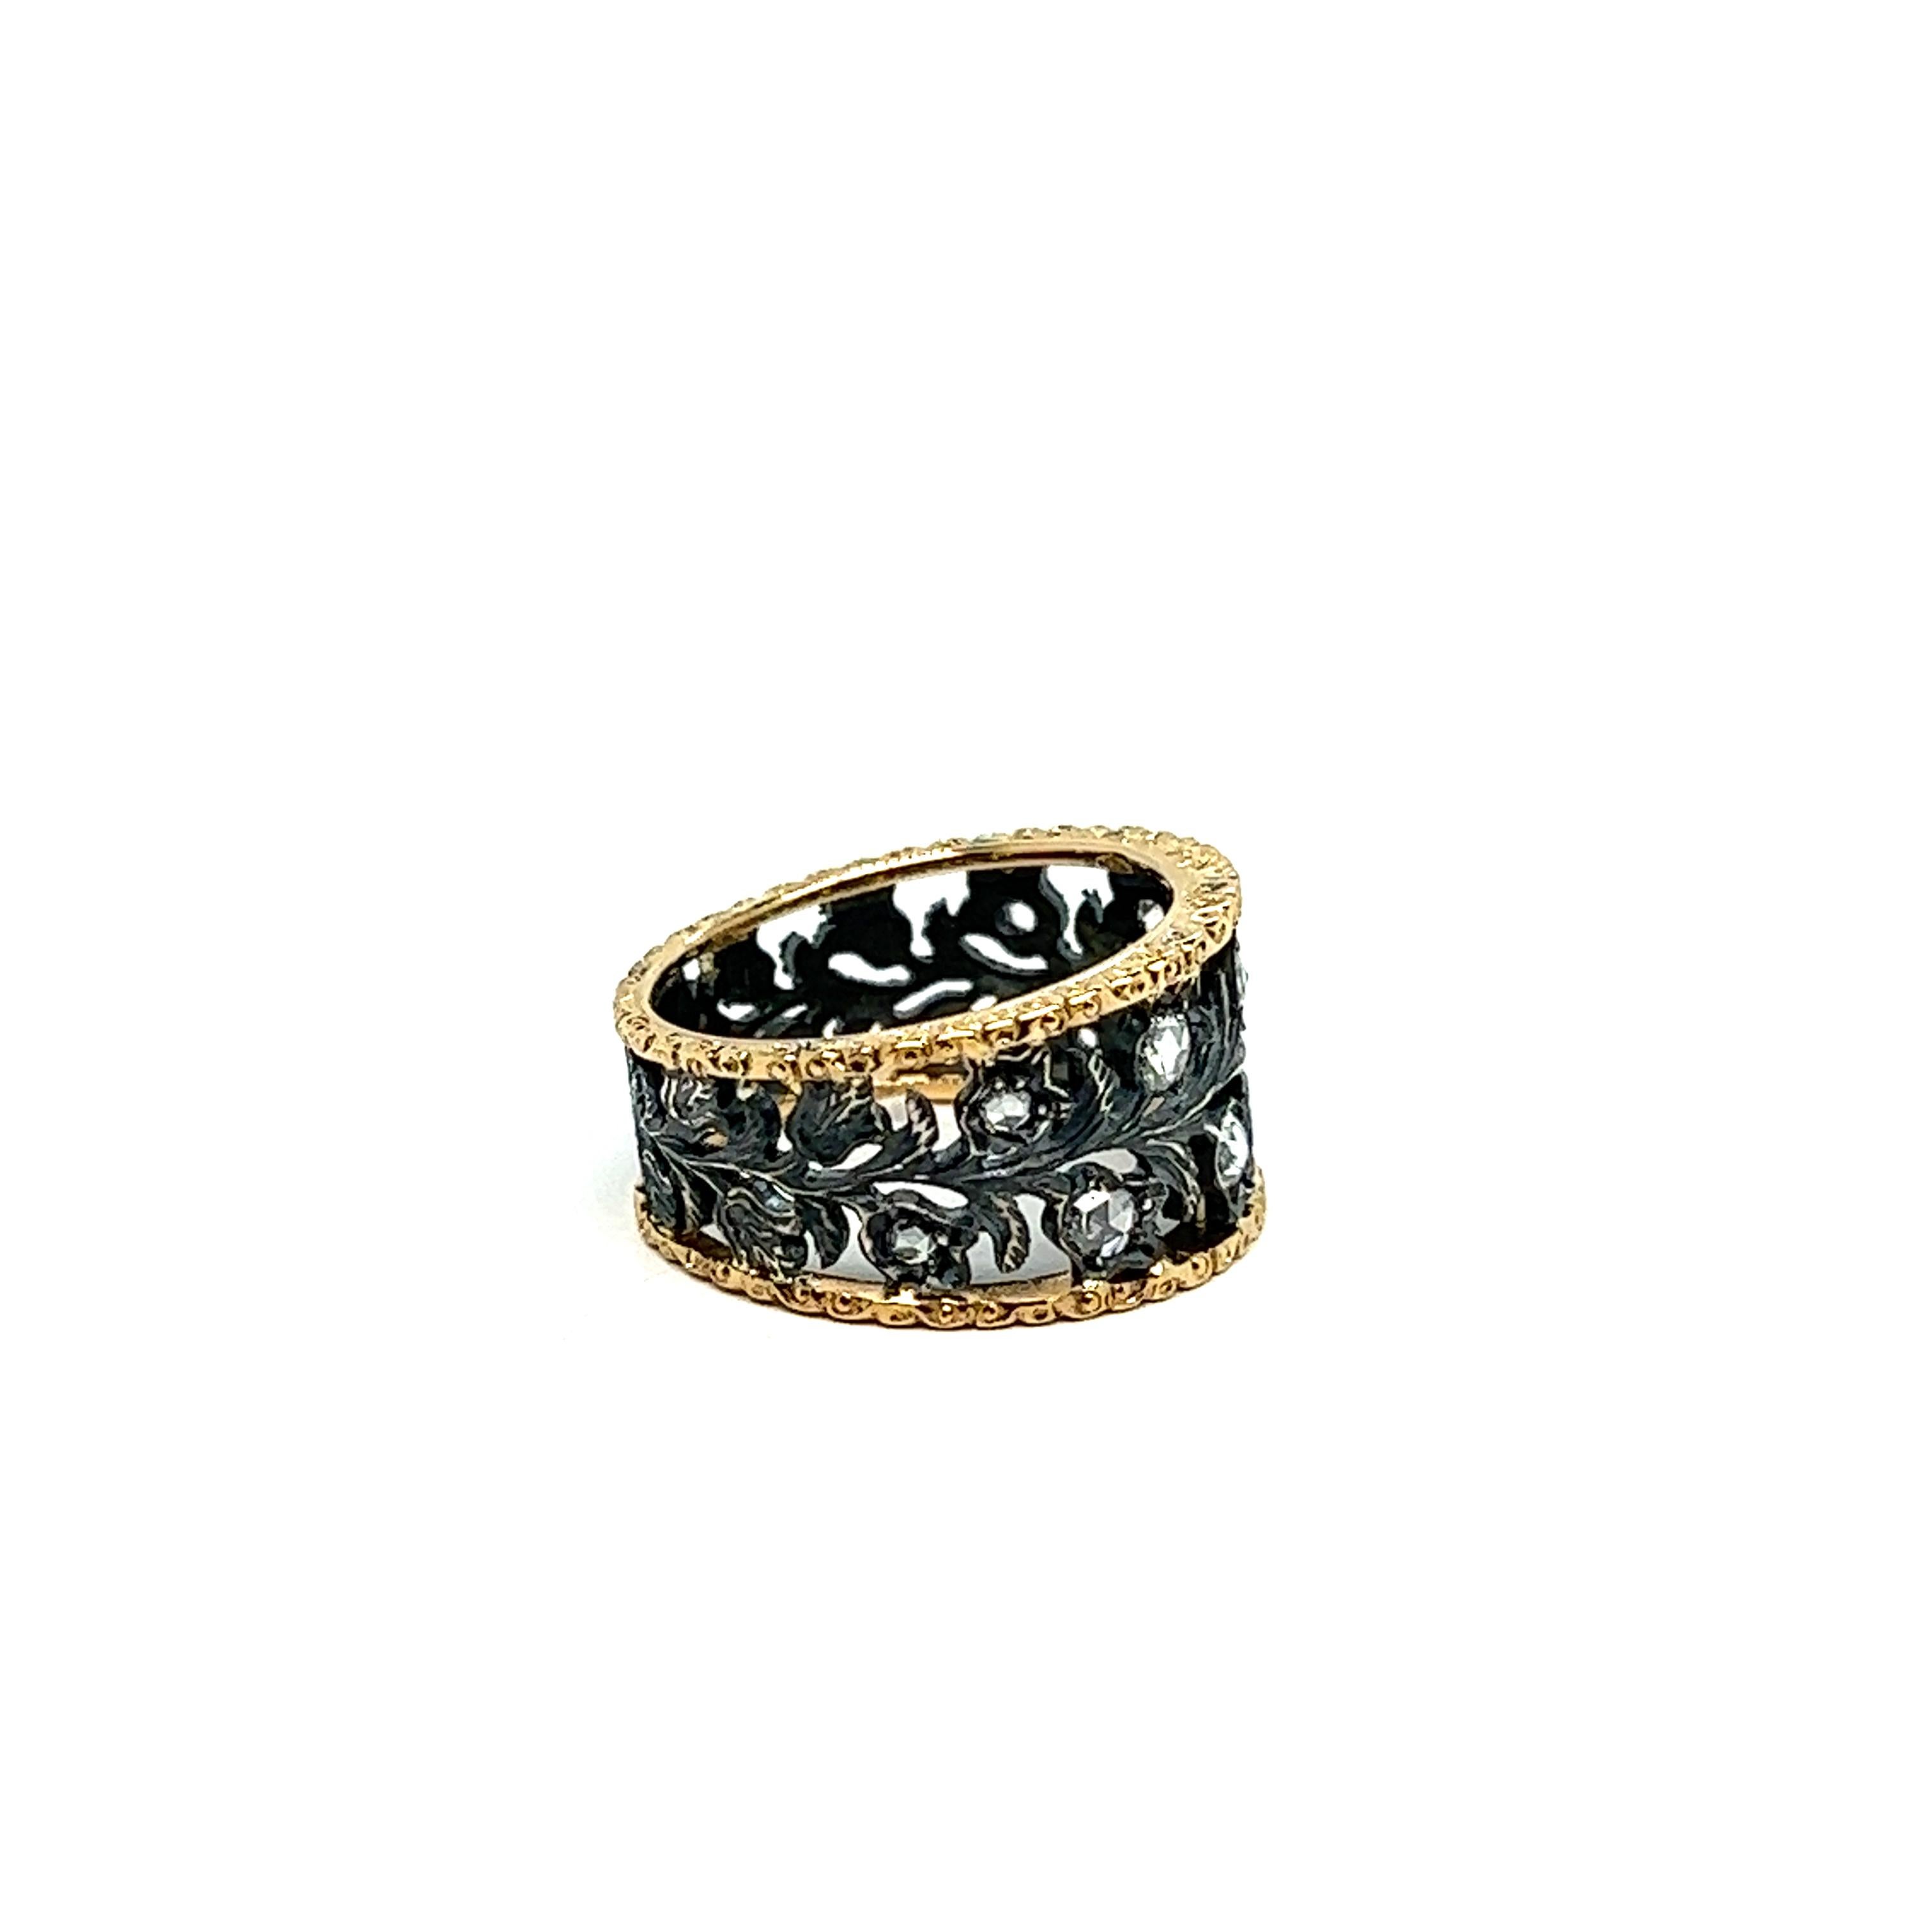 Women's or Men's Yellow Gold Baroque Ring, Silver, 10 Pink Diamonds, Antique Cut, Flower Design